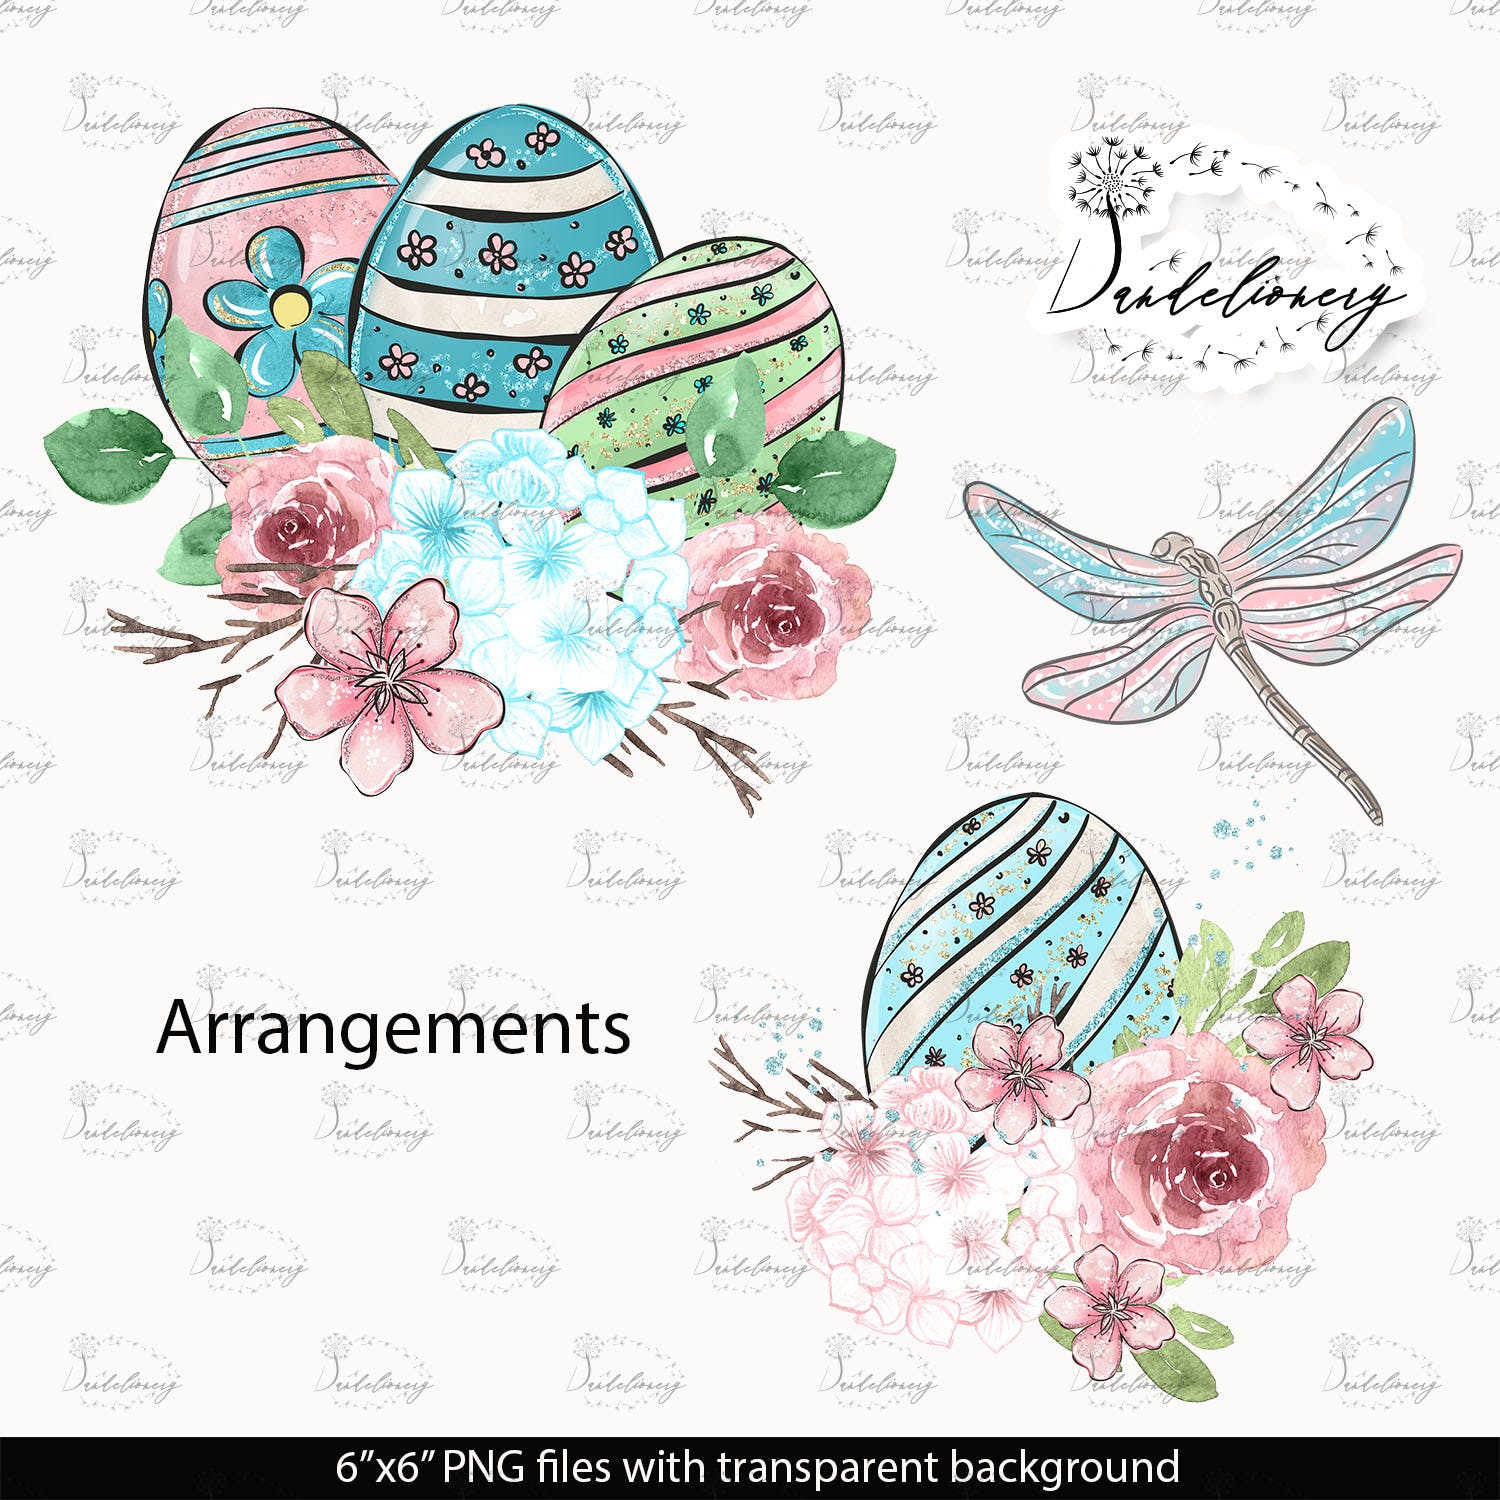 复活节蜻蜓水彩手绘剪贴画PNG素材 Happy Easter dragonfly design插图(2)